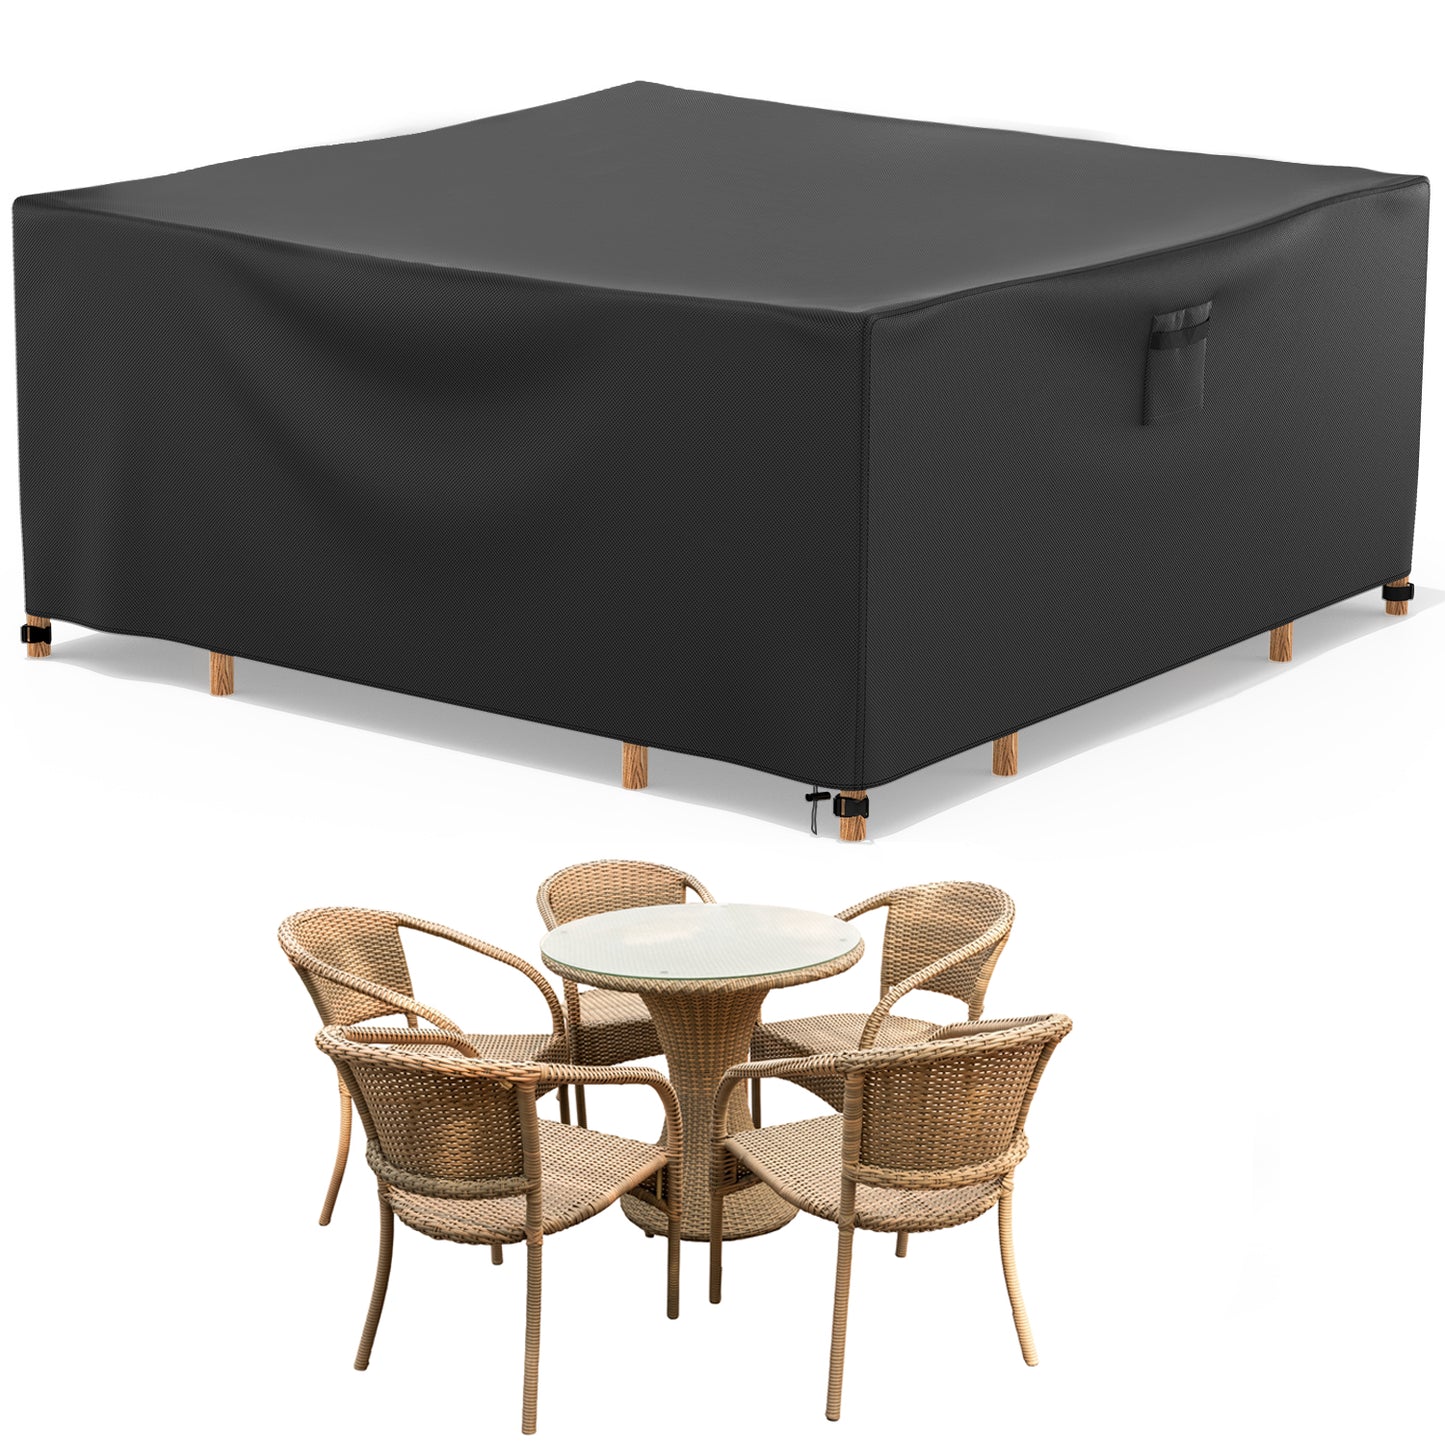 BROSYDA Garden Furniture Covers 150x150x74cm